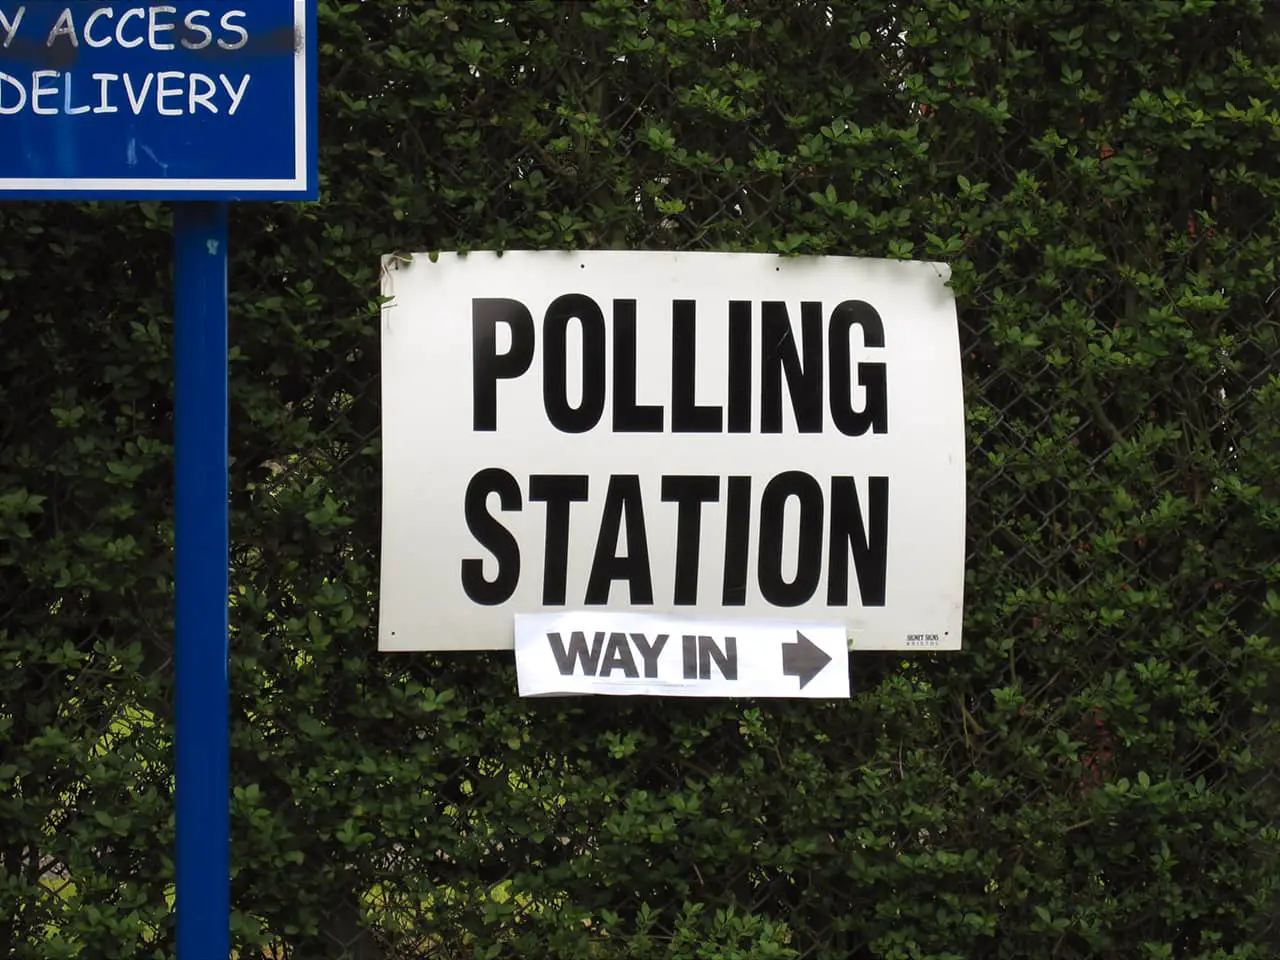 Polling station sign on a bush